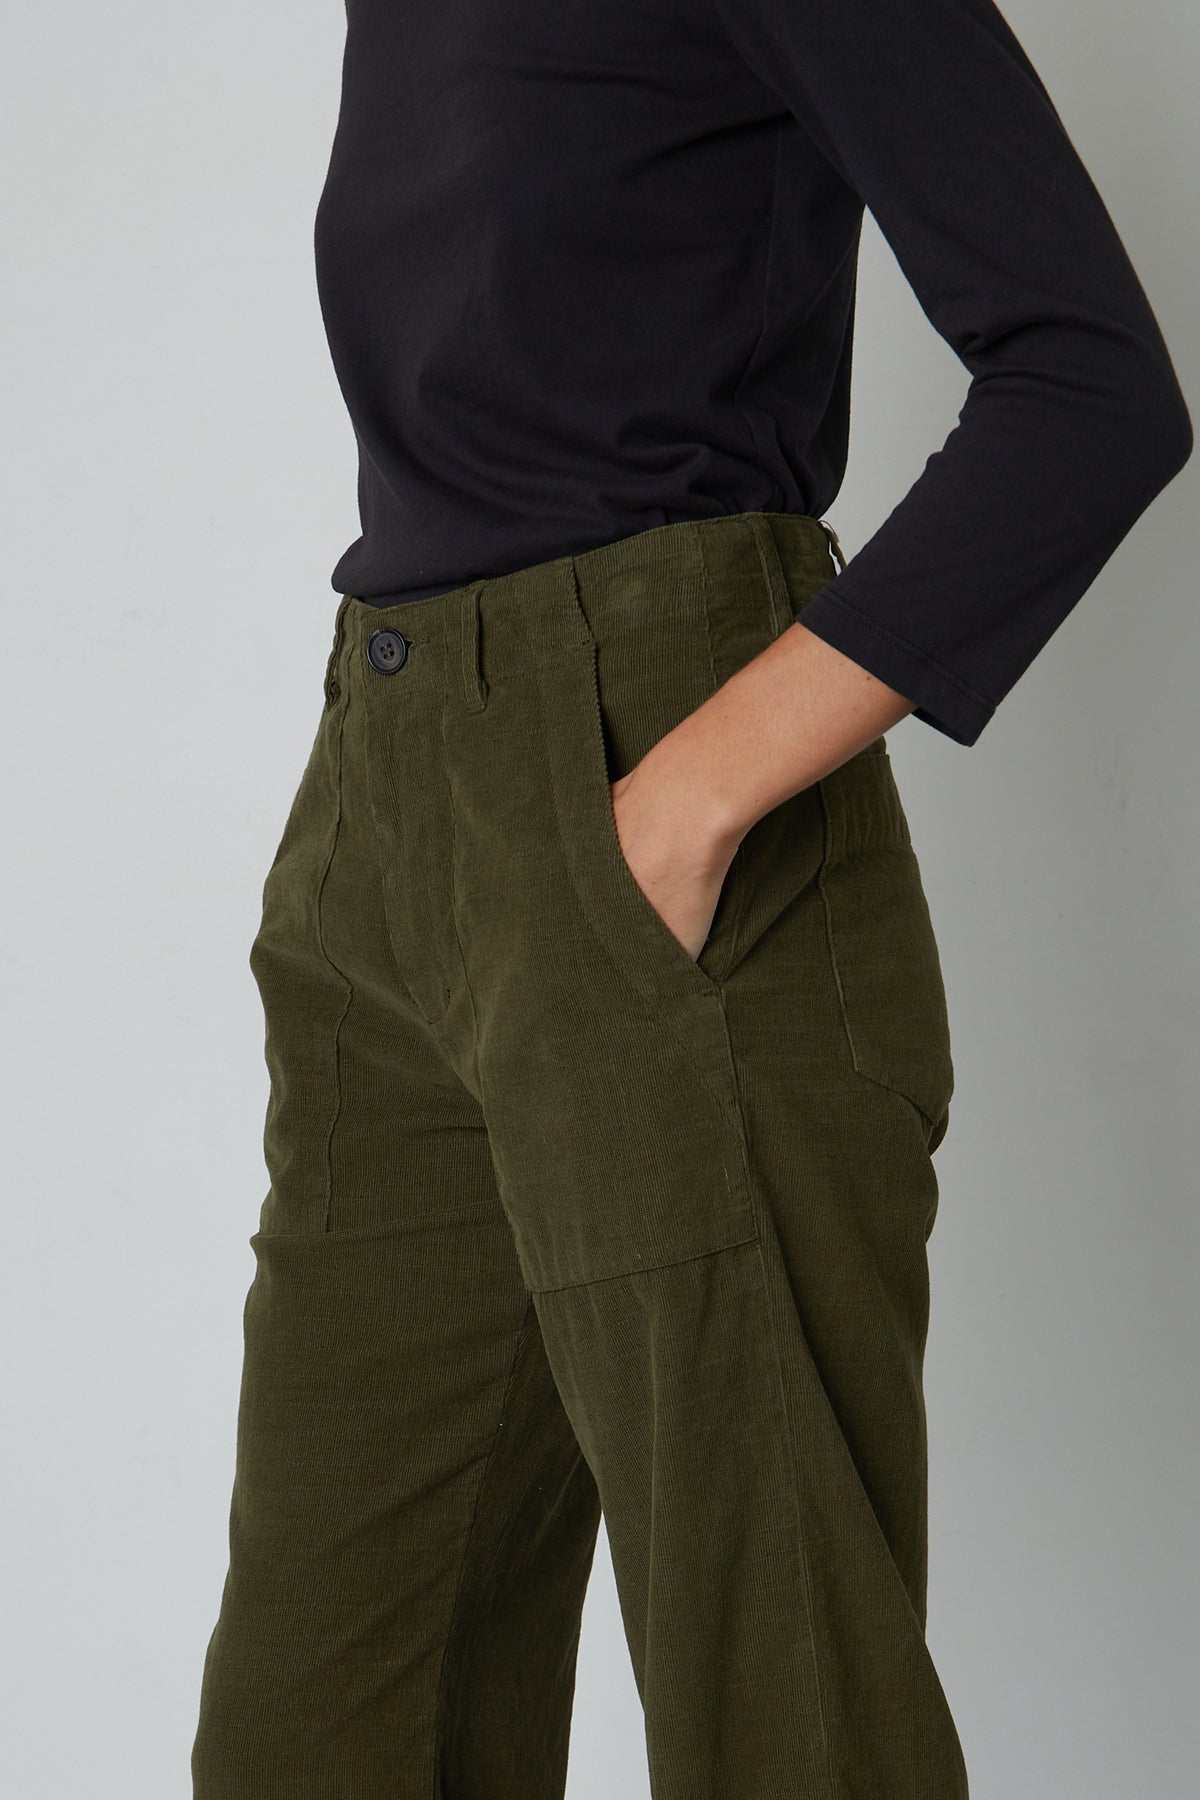 Vera Corduroy Wide Leg Pant in dark green dillweed pocket detail-26654355259585